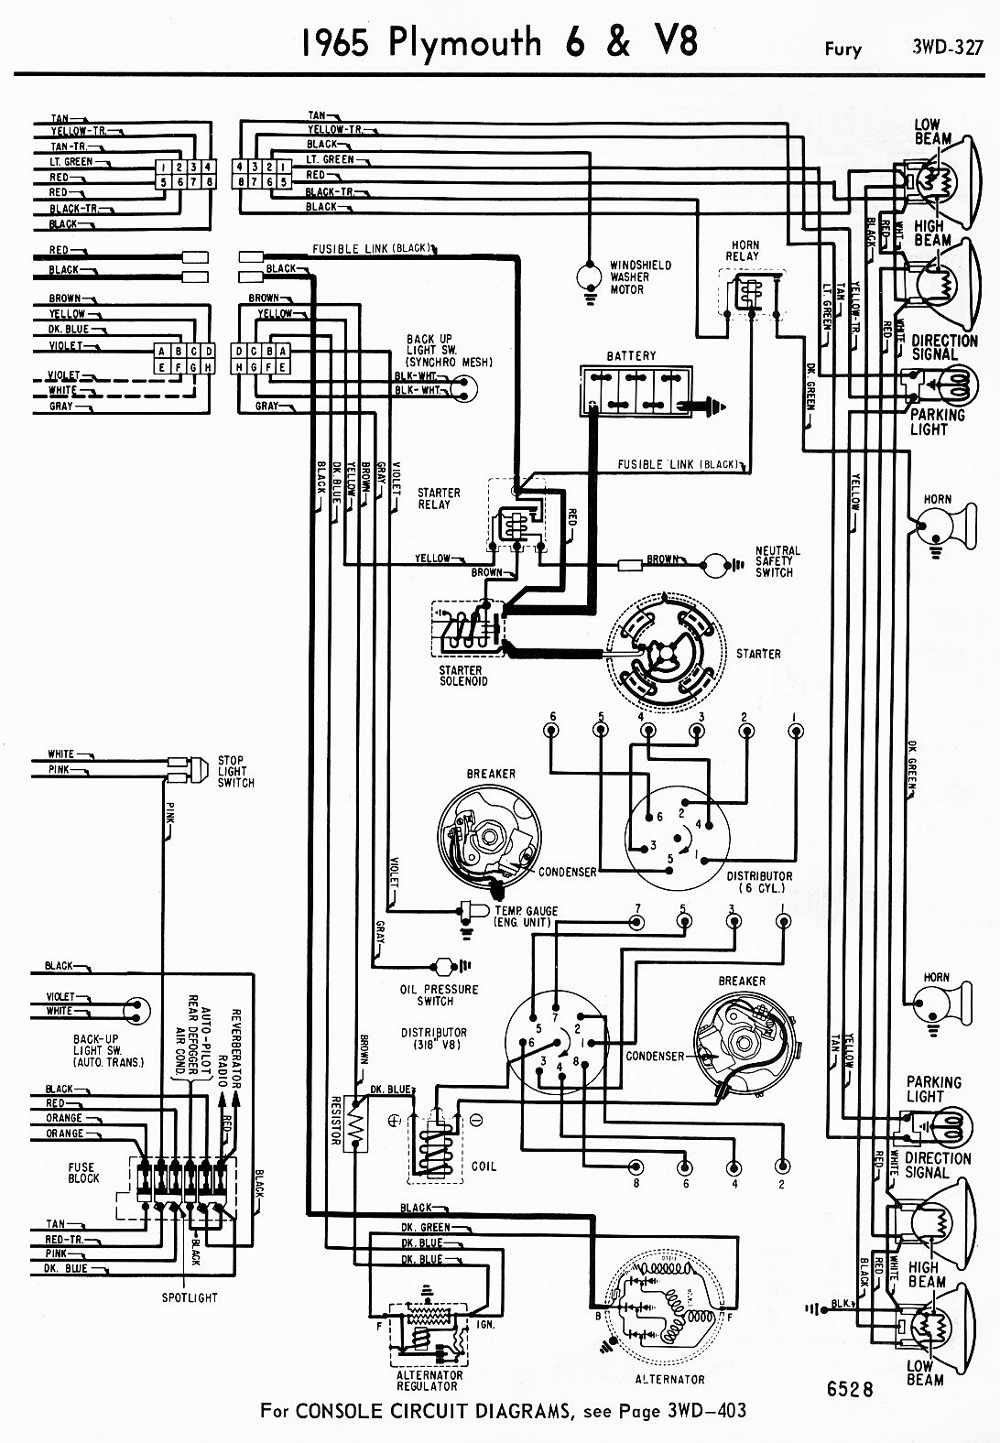 Plymouth Car Pdf Manual Wiring